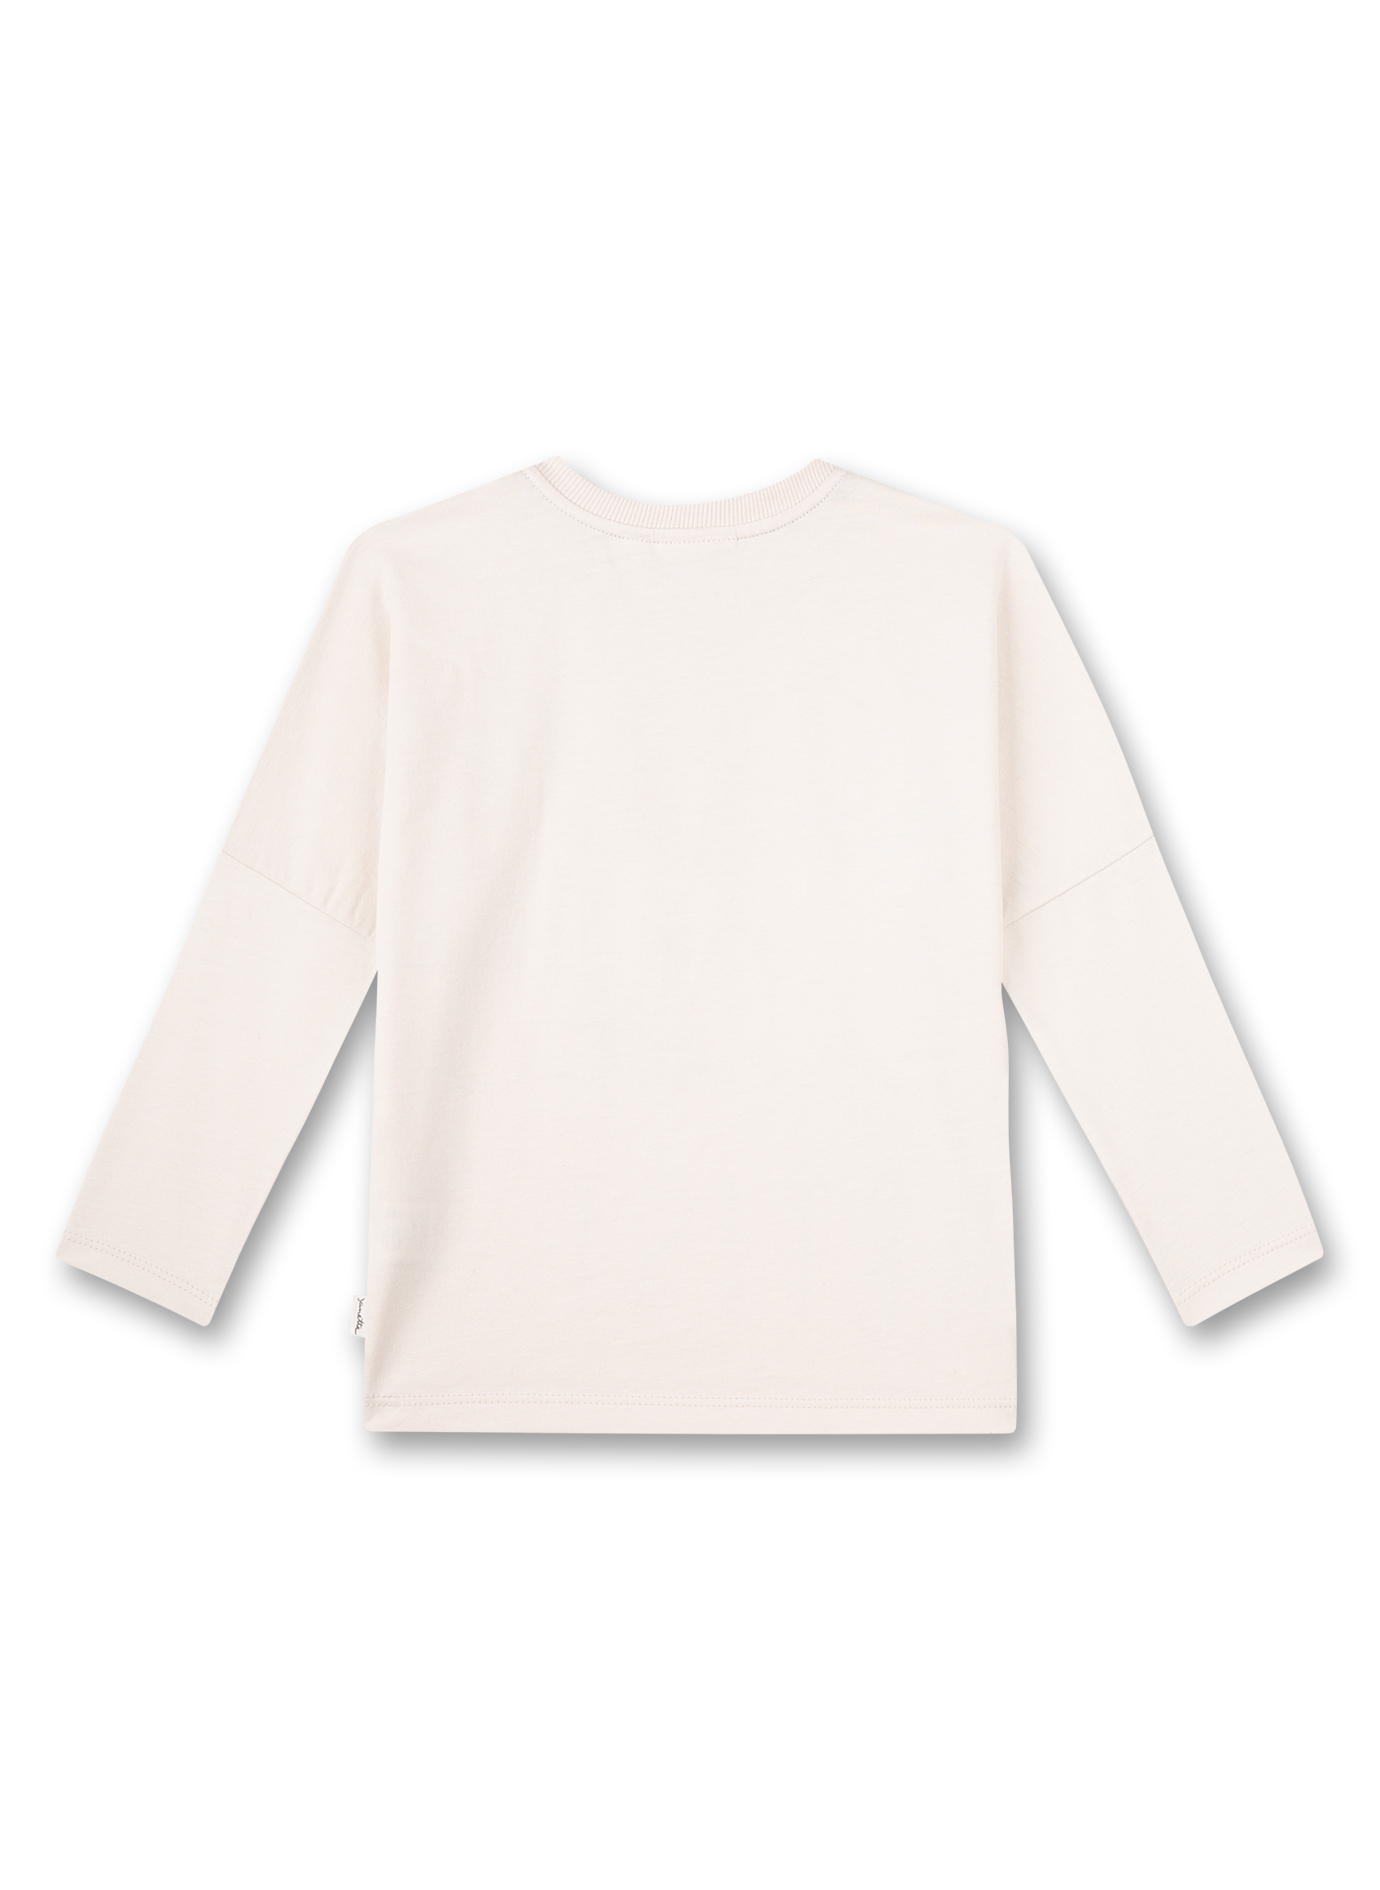 Mädchen-Shirt langarm Off-White